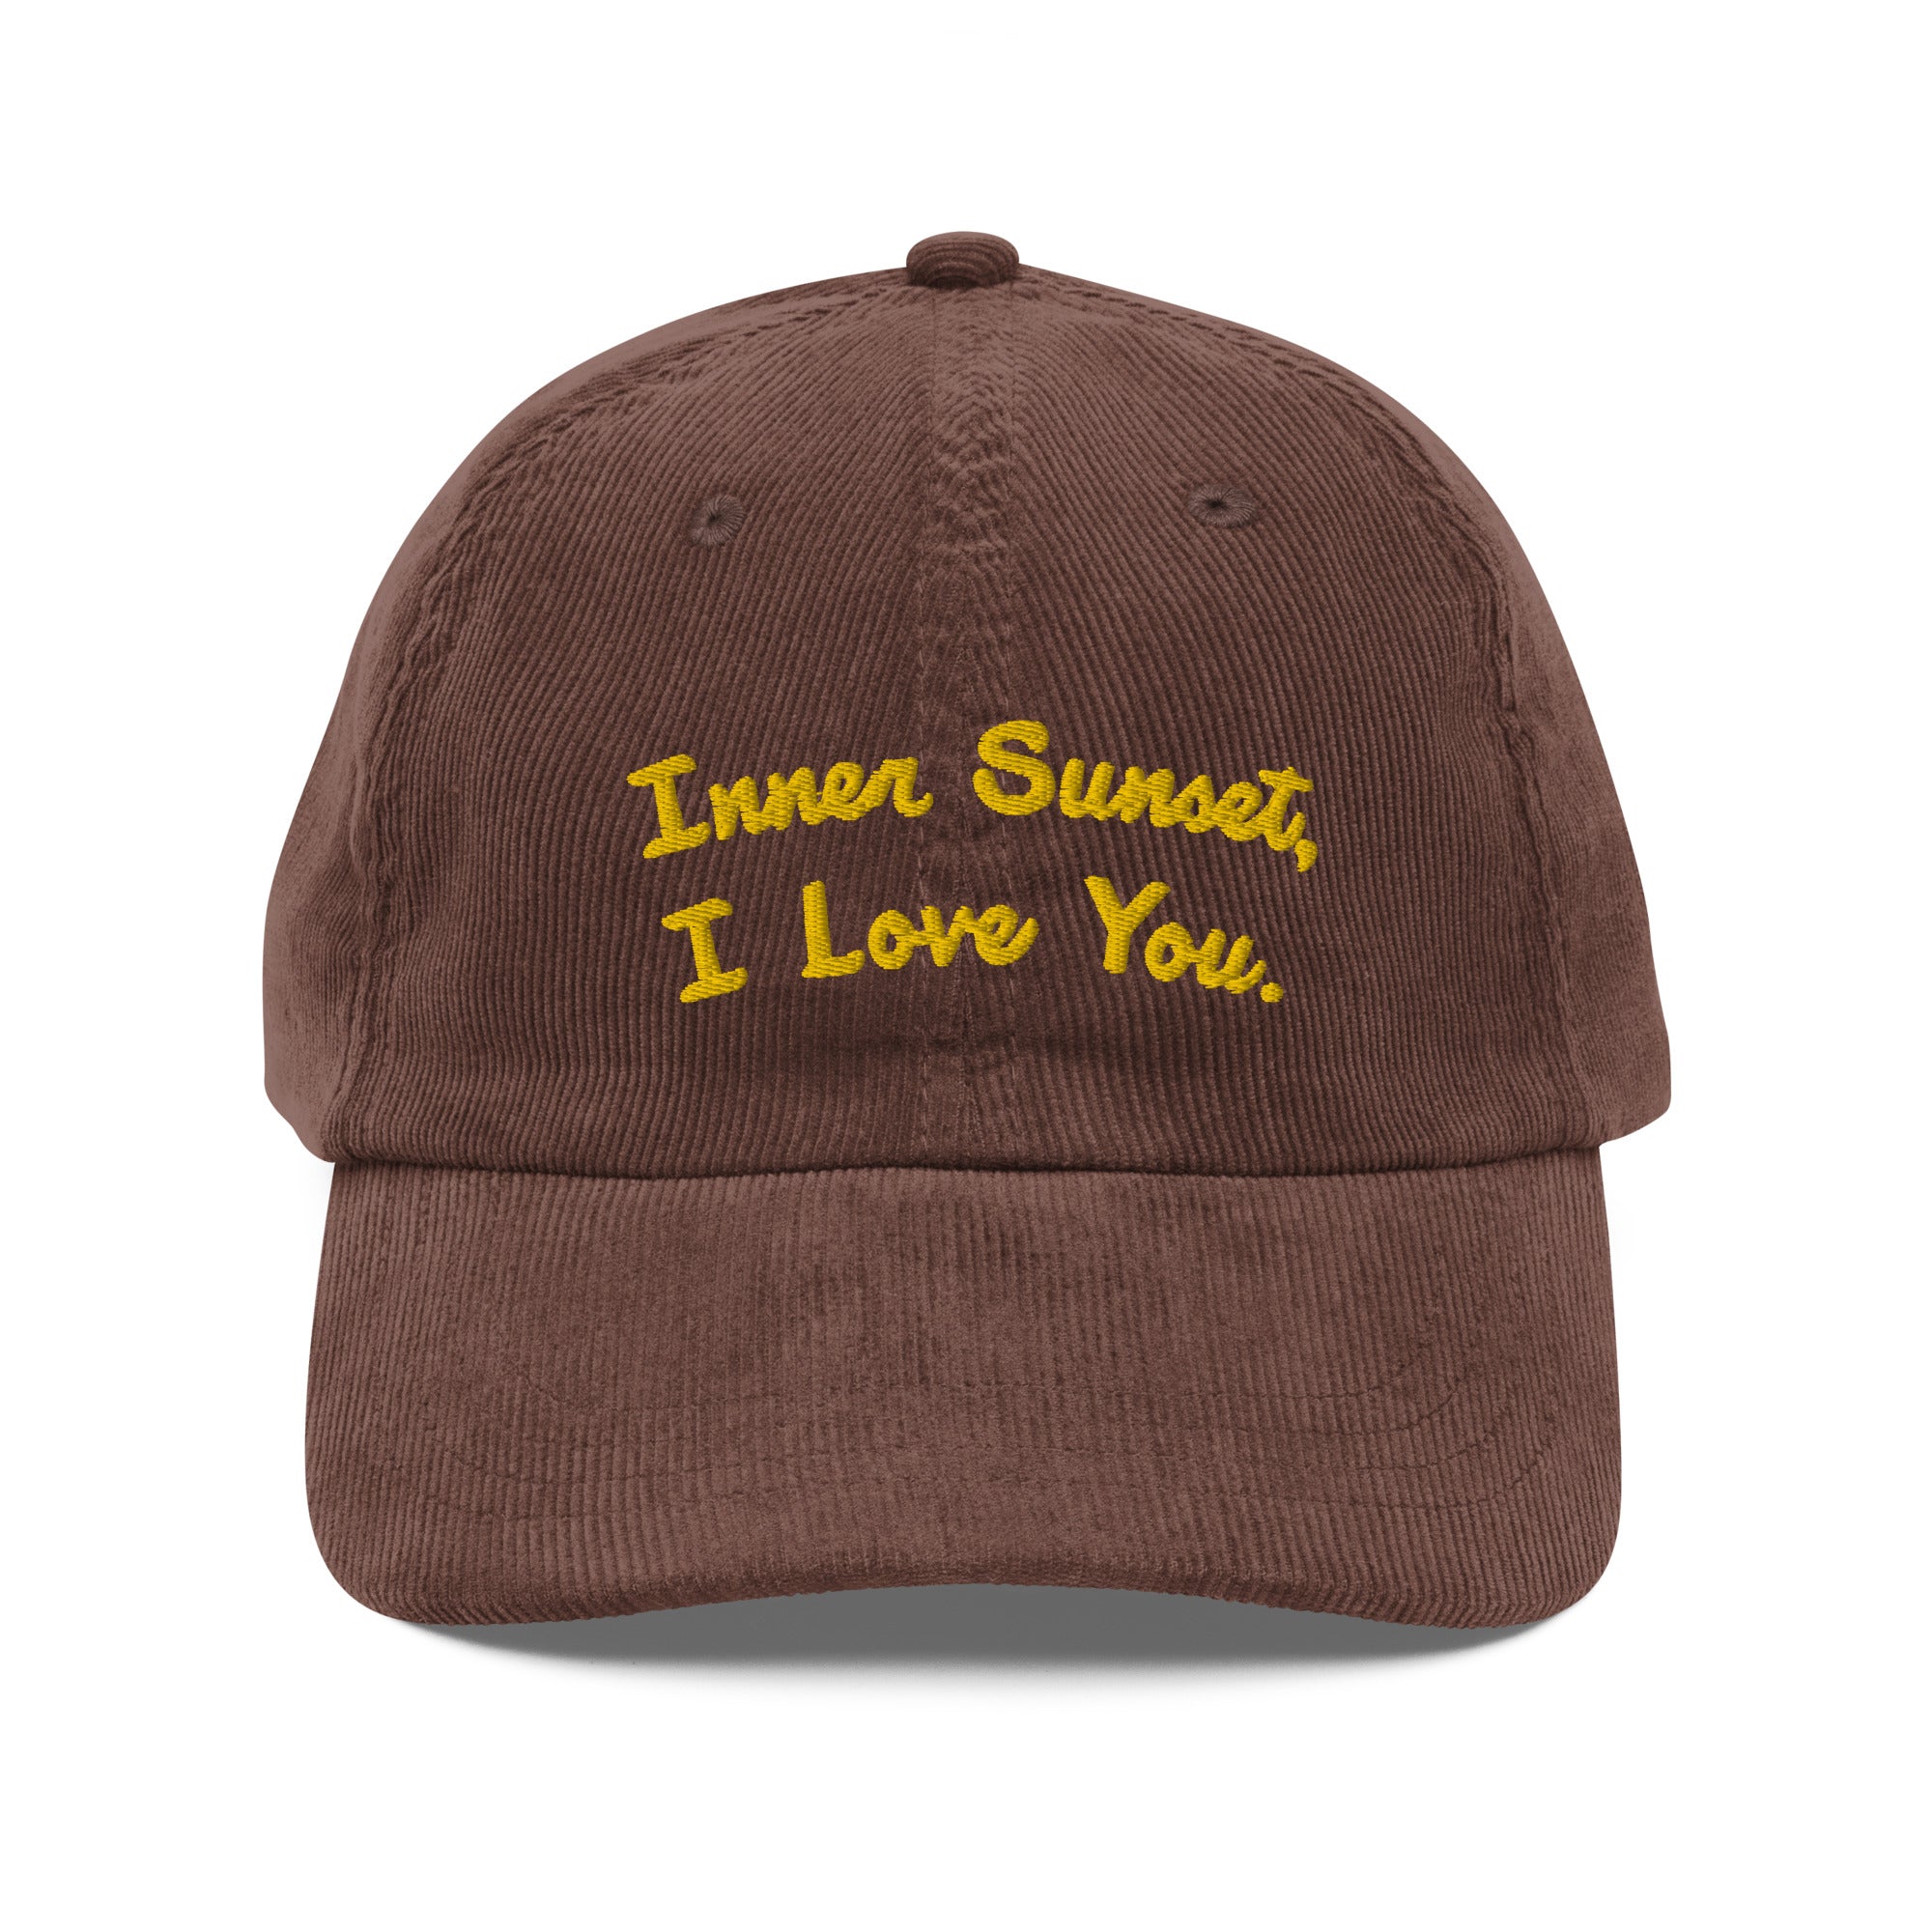 I Love You Corduroy Hat - Inner Sunset | San Francisco, CA